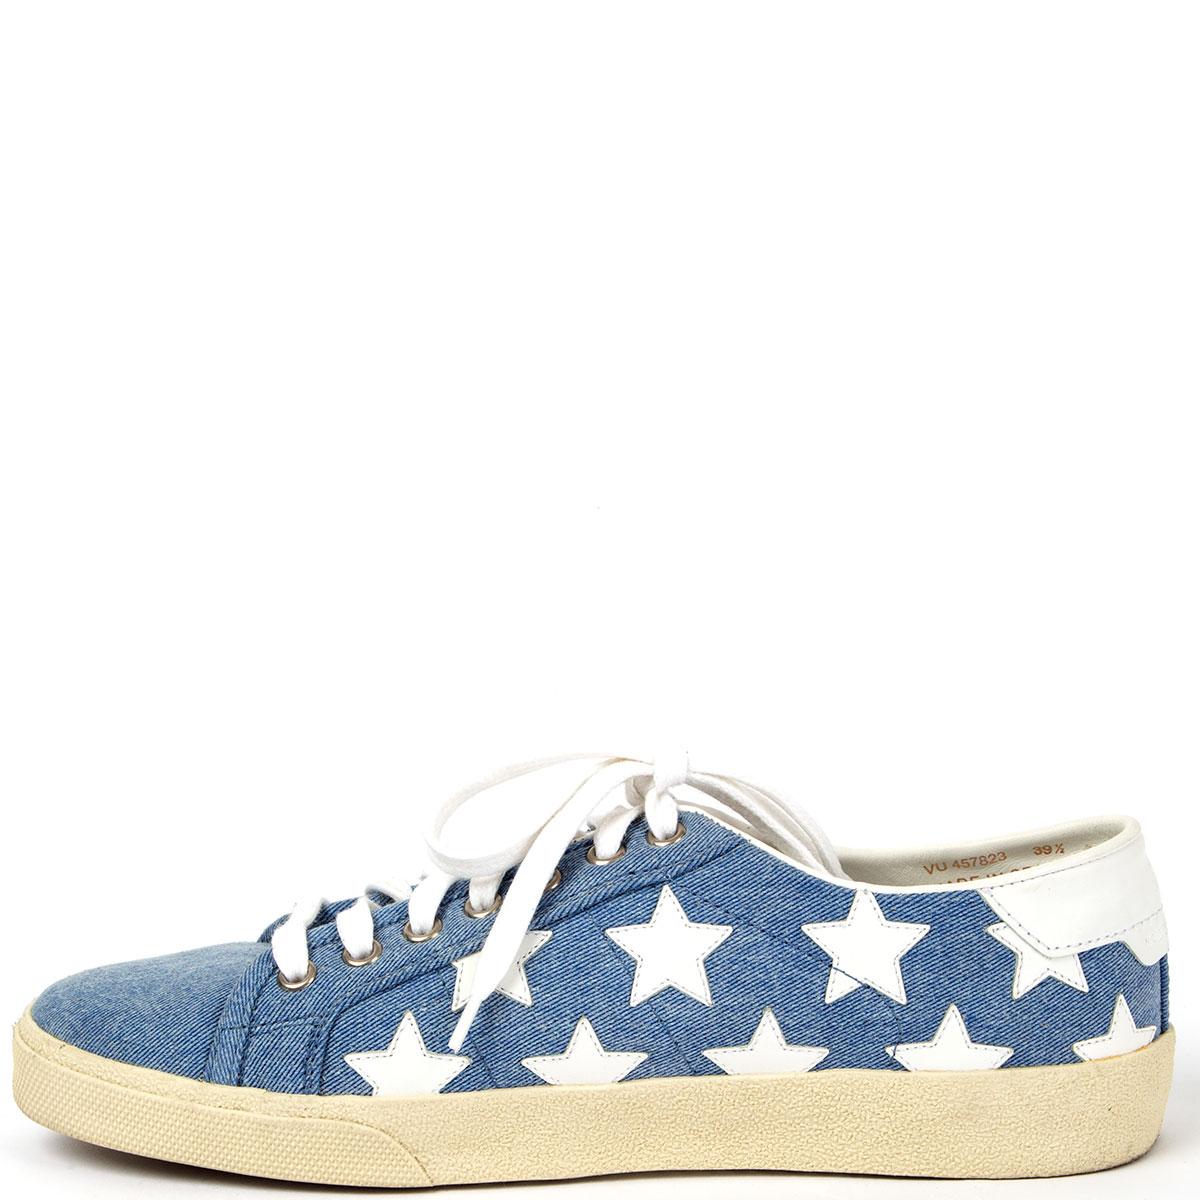 SAINT LAURENT blaue Denim CLASSIC COURT STAR Sneakers Schuhe 39,5 (Grau) im Angebot